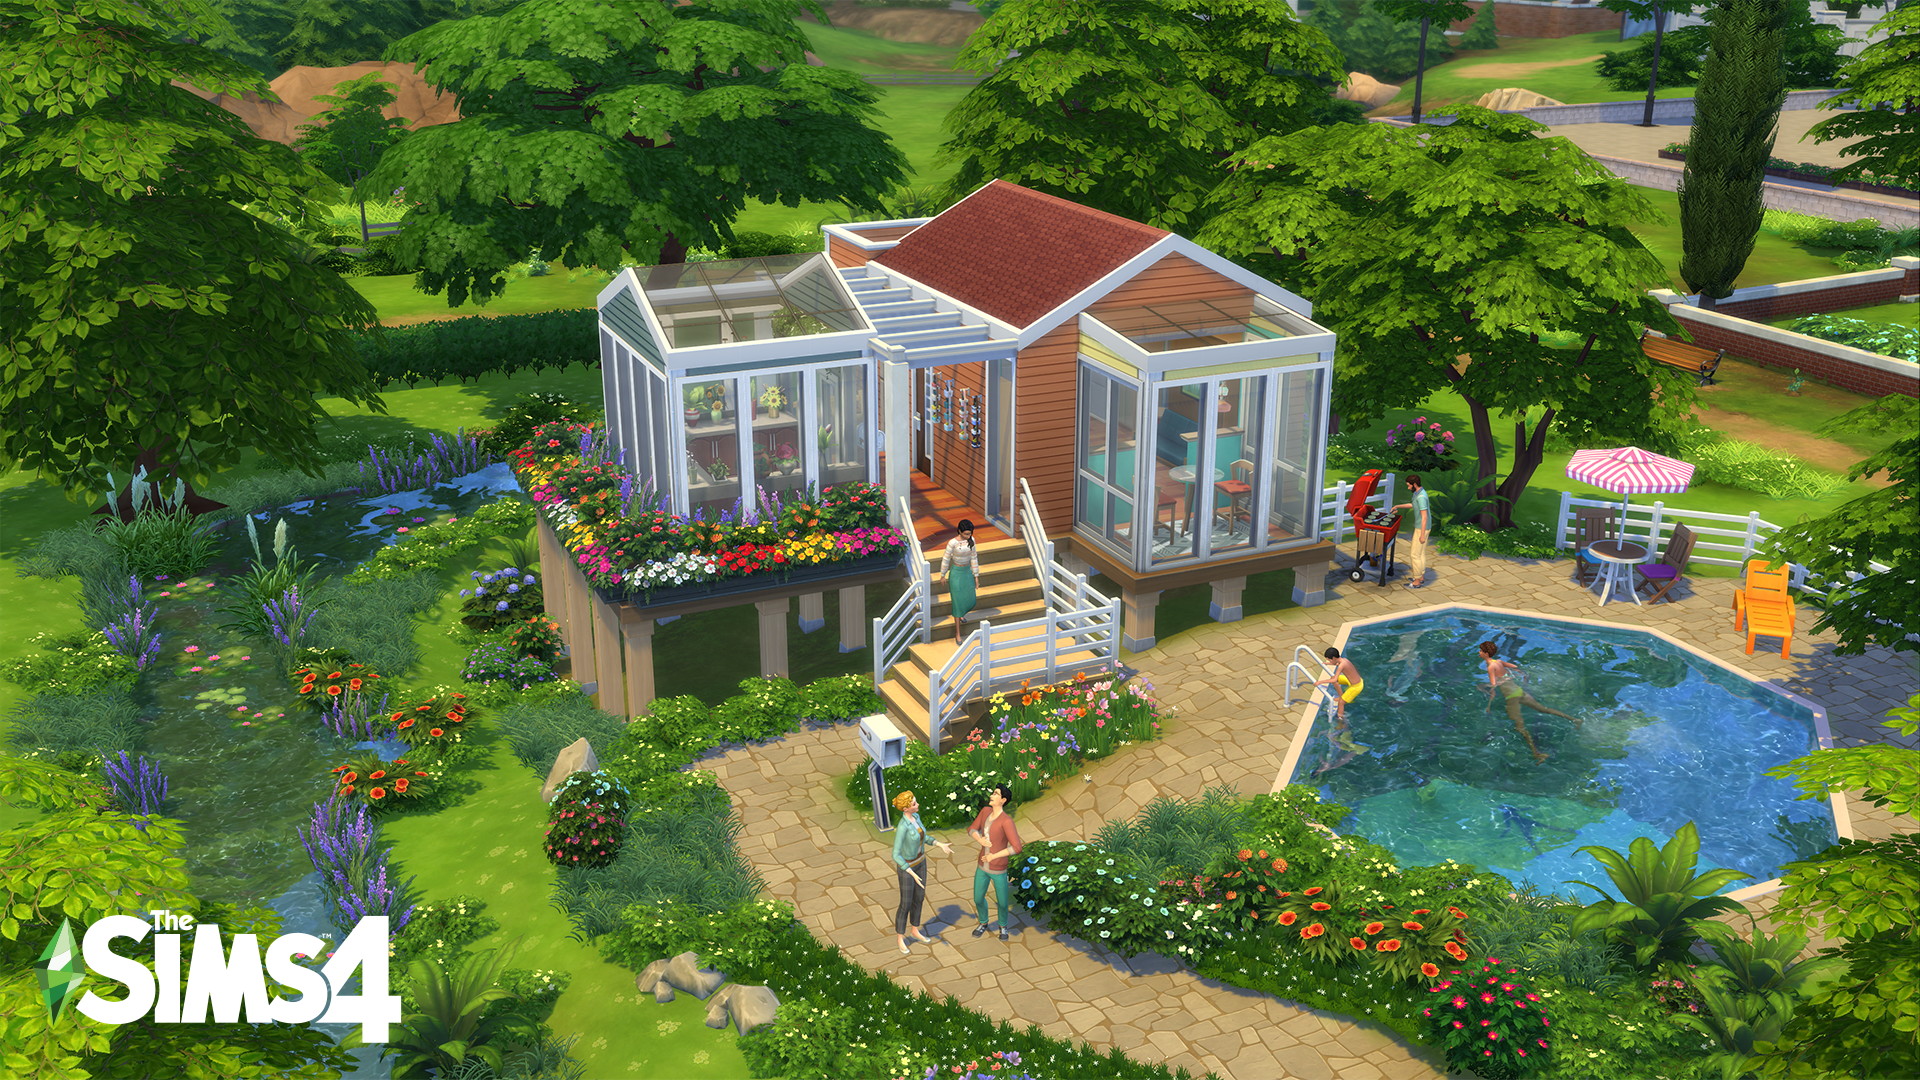 The Sims 4: Tiny Living - screenshot 4